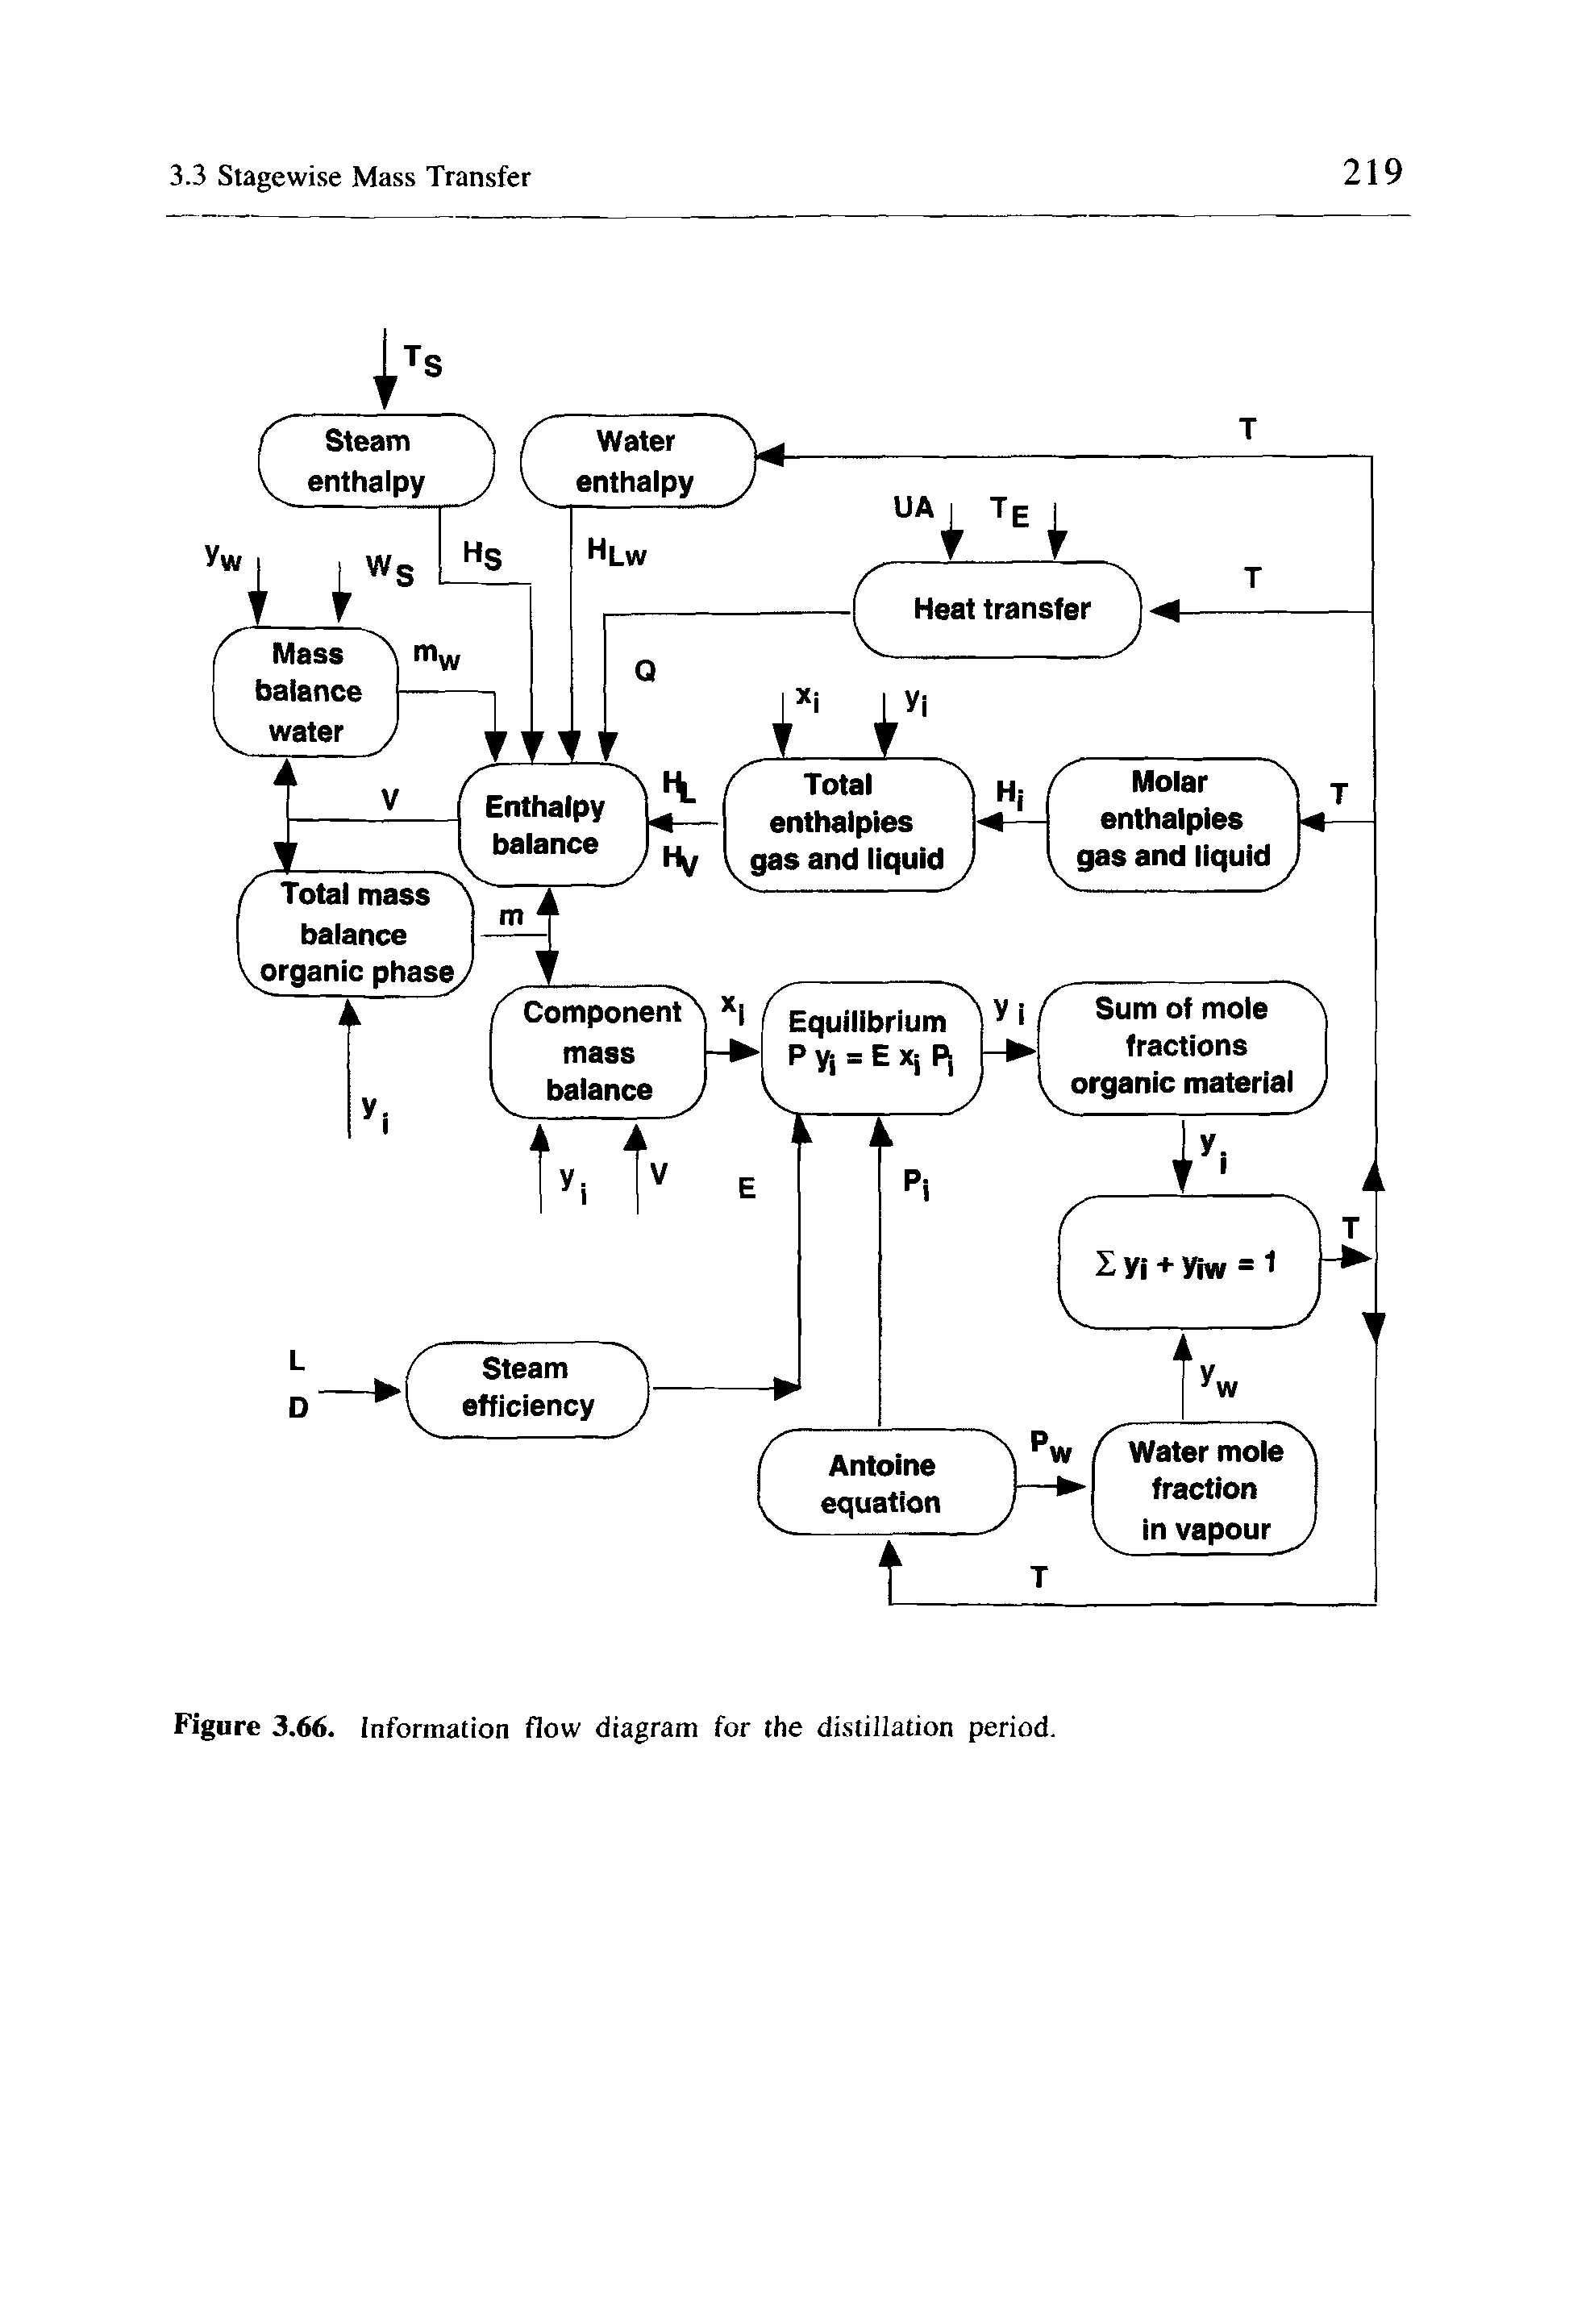 Figure 3.66. Information flow diagram for the distillation period.